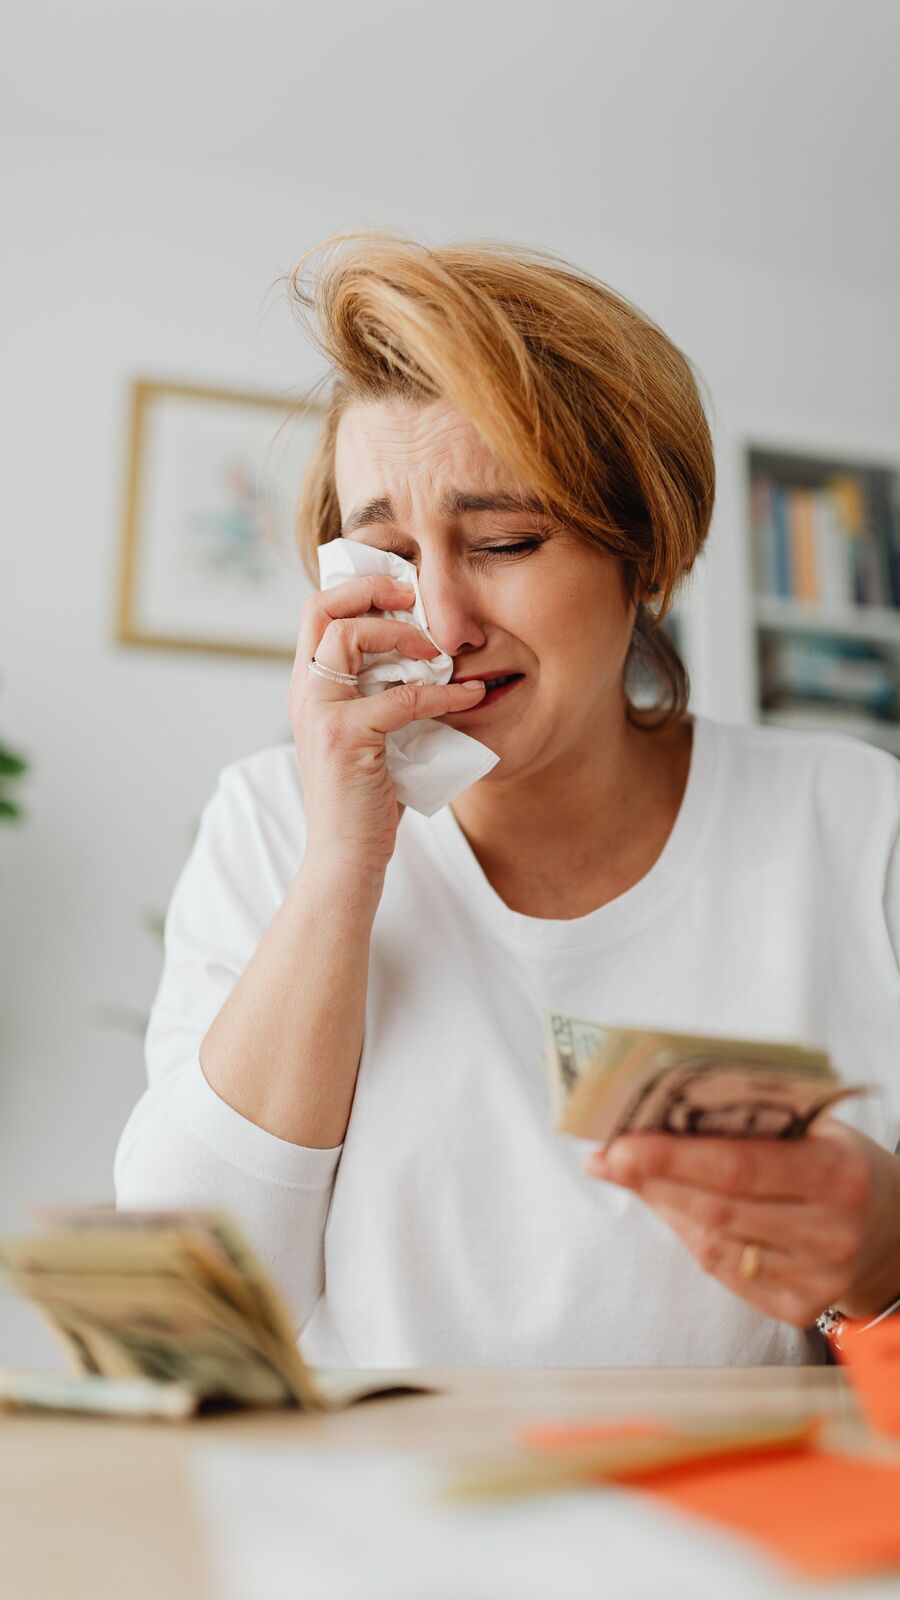 4 Ways To Deal With Financial Trauma